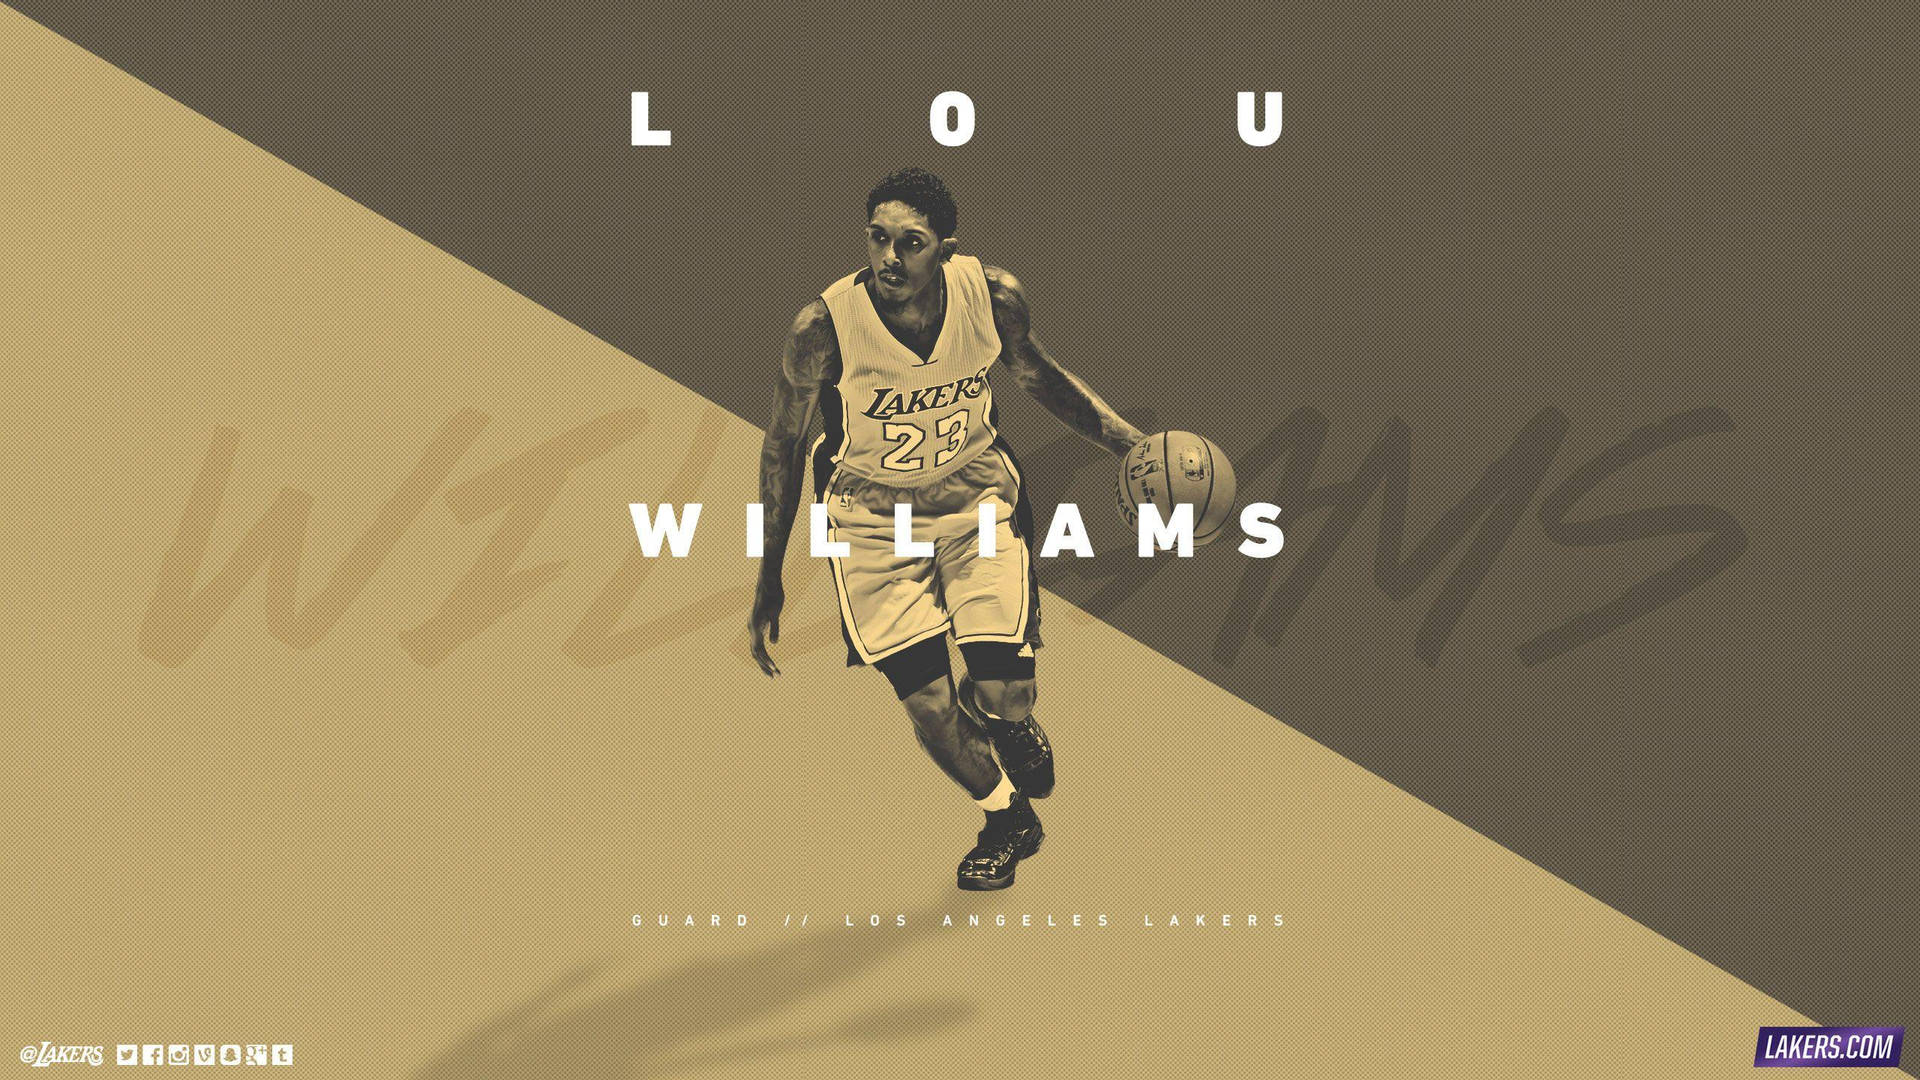 Lou Williams Digital Image